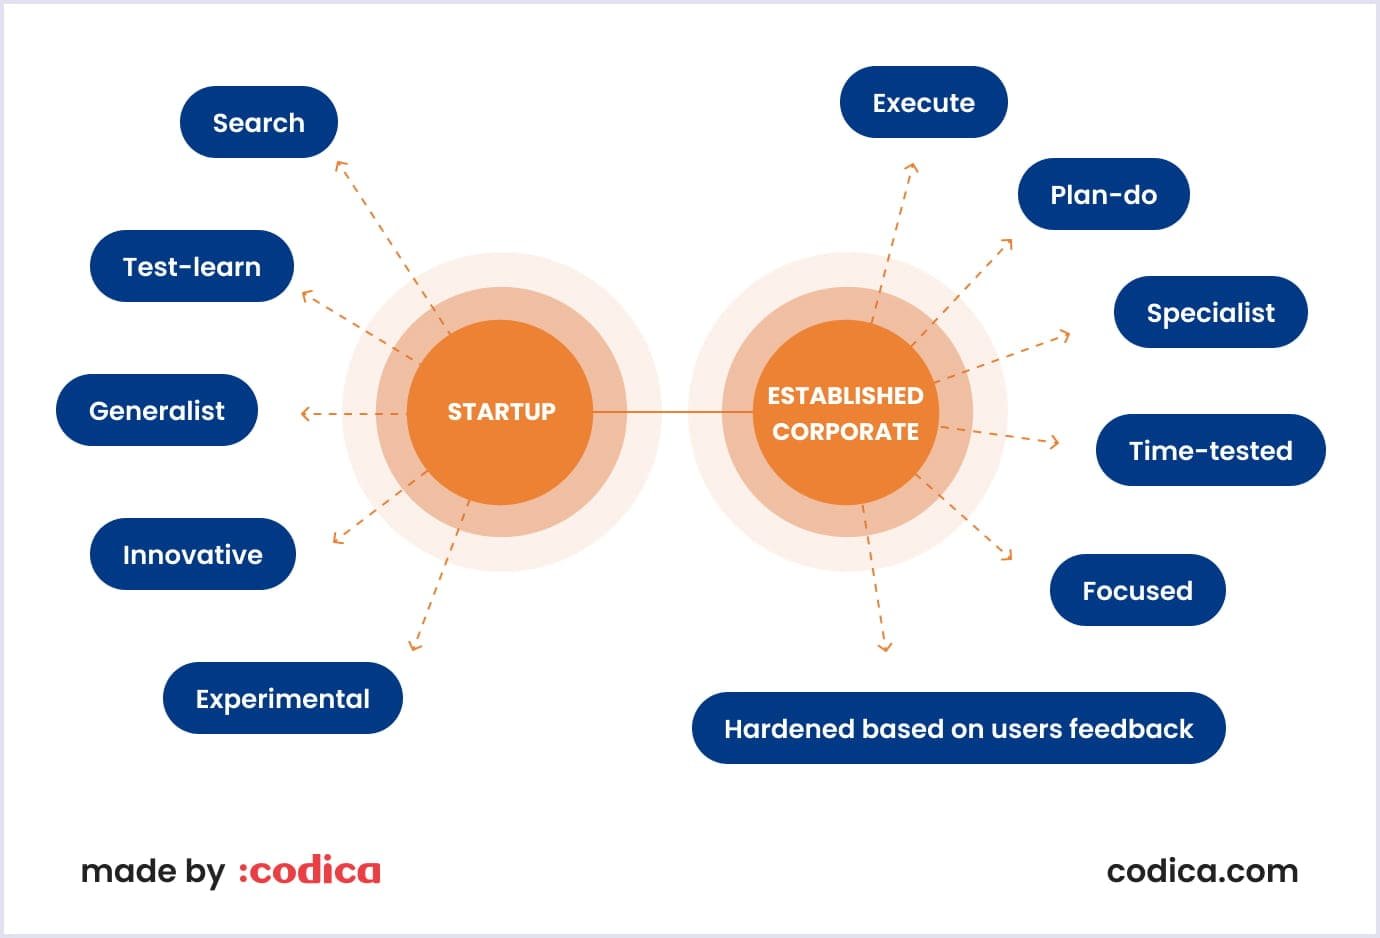 Major distinctions between established corporate and startup